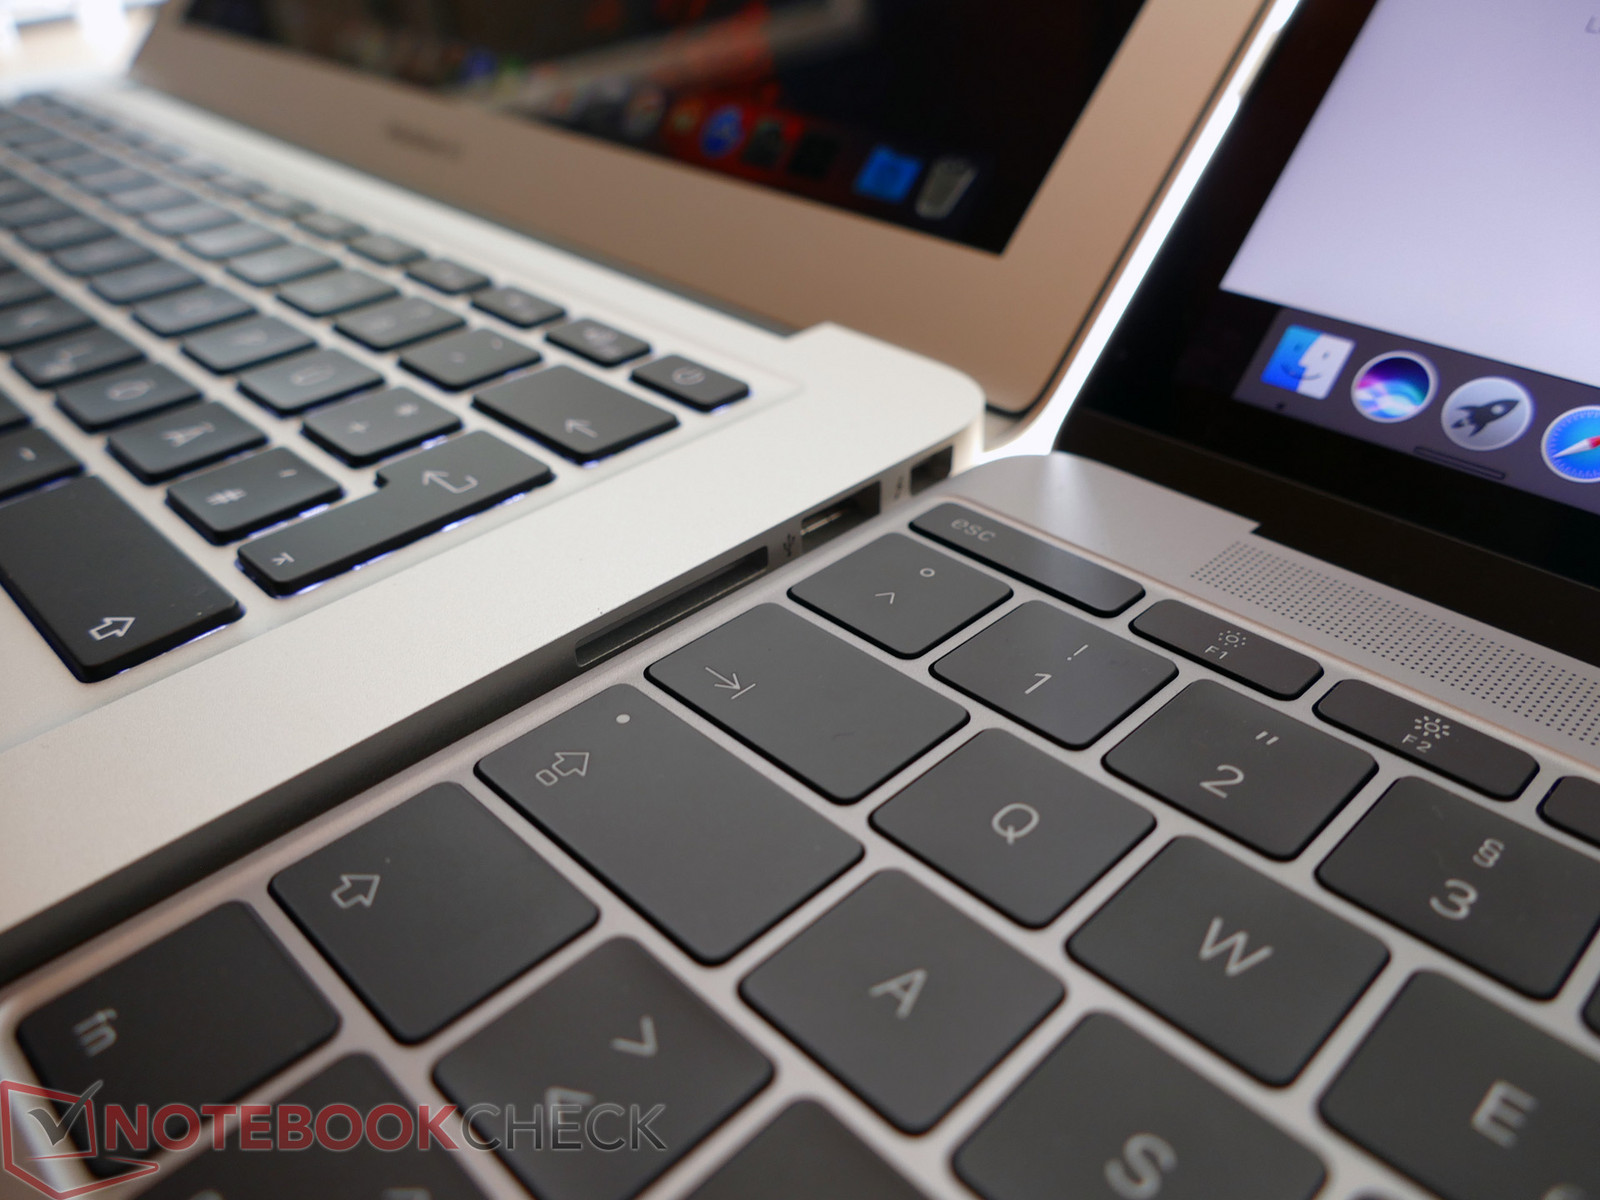 Affect front Humane Apple MacBook Air 13 2017 Laptop (1.8 GHz) Review - NotebookCheck.net  Reviews